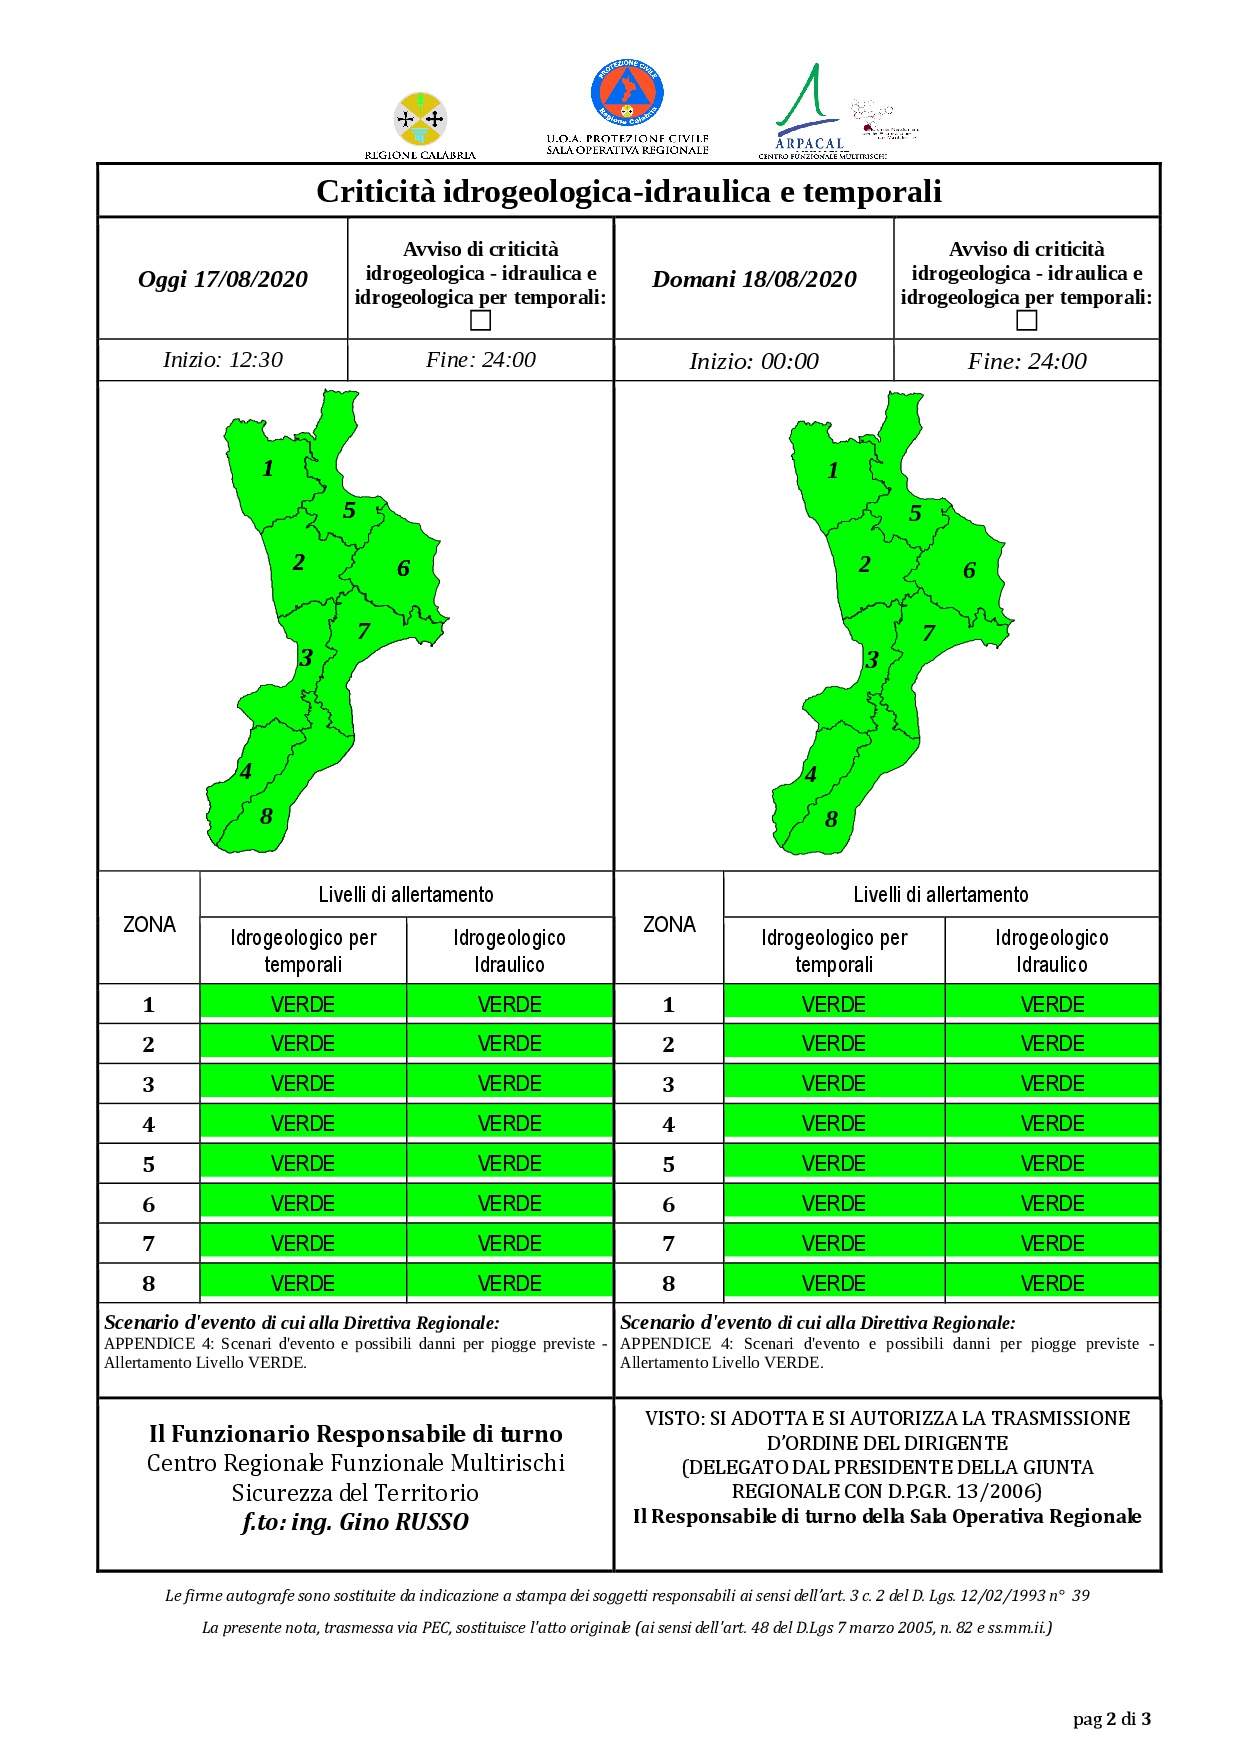 Criticità idrogeologica-idraulica e temporali in Calabria 17-08-2020